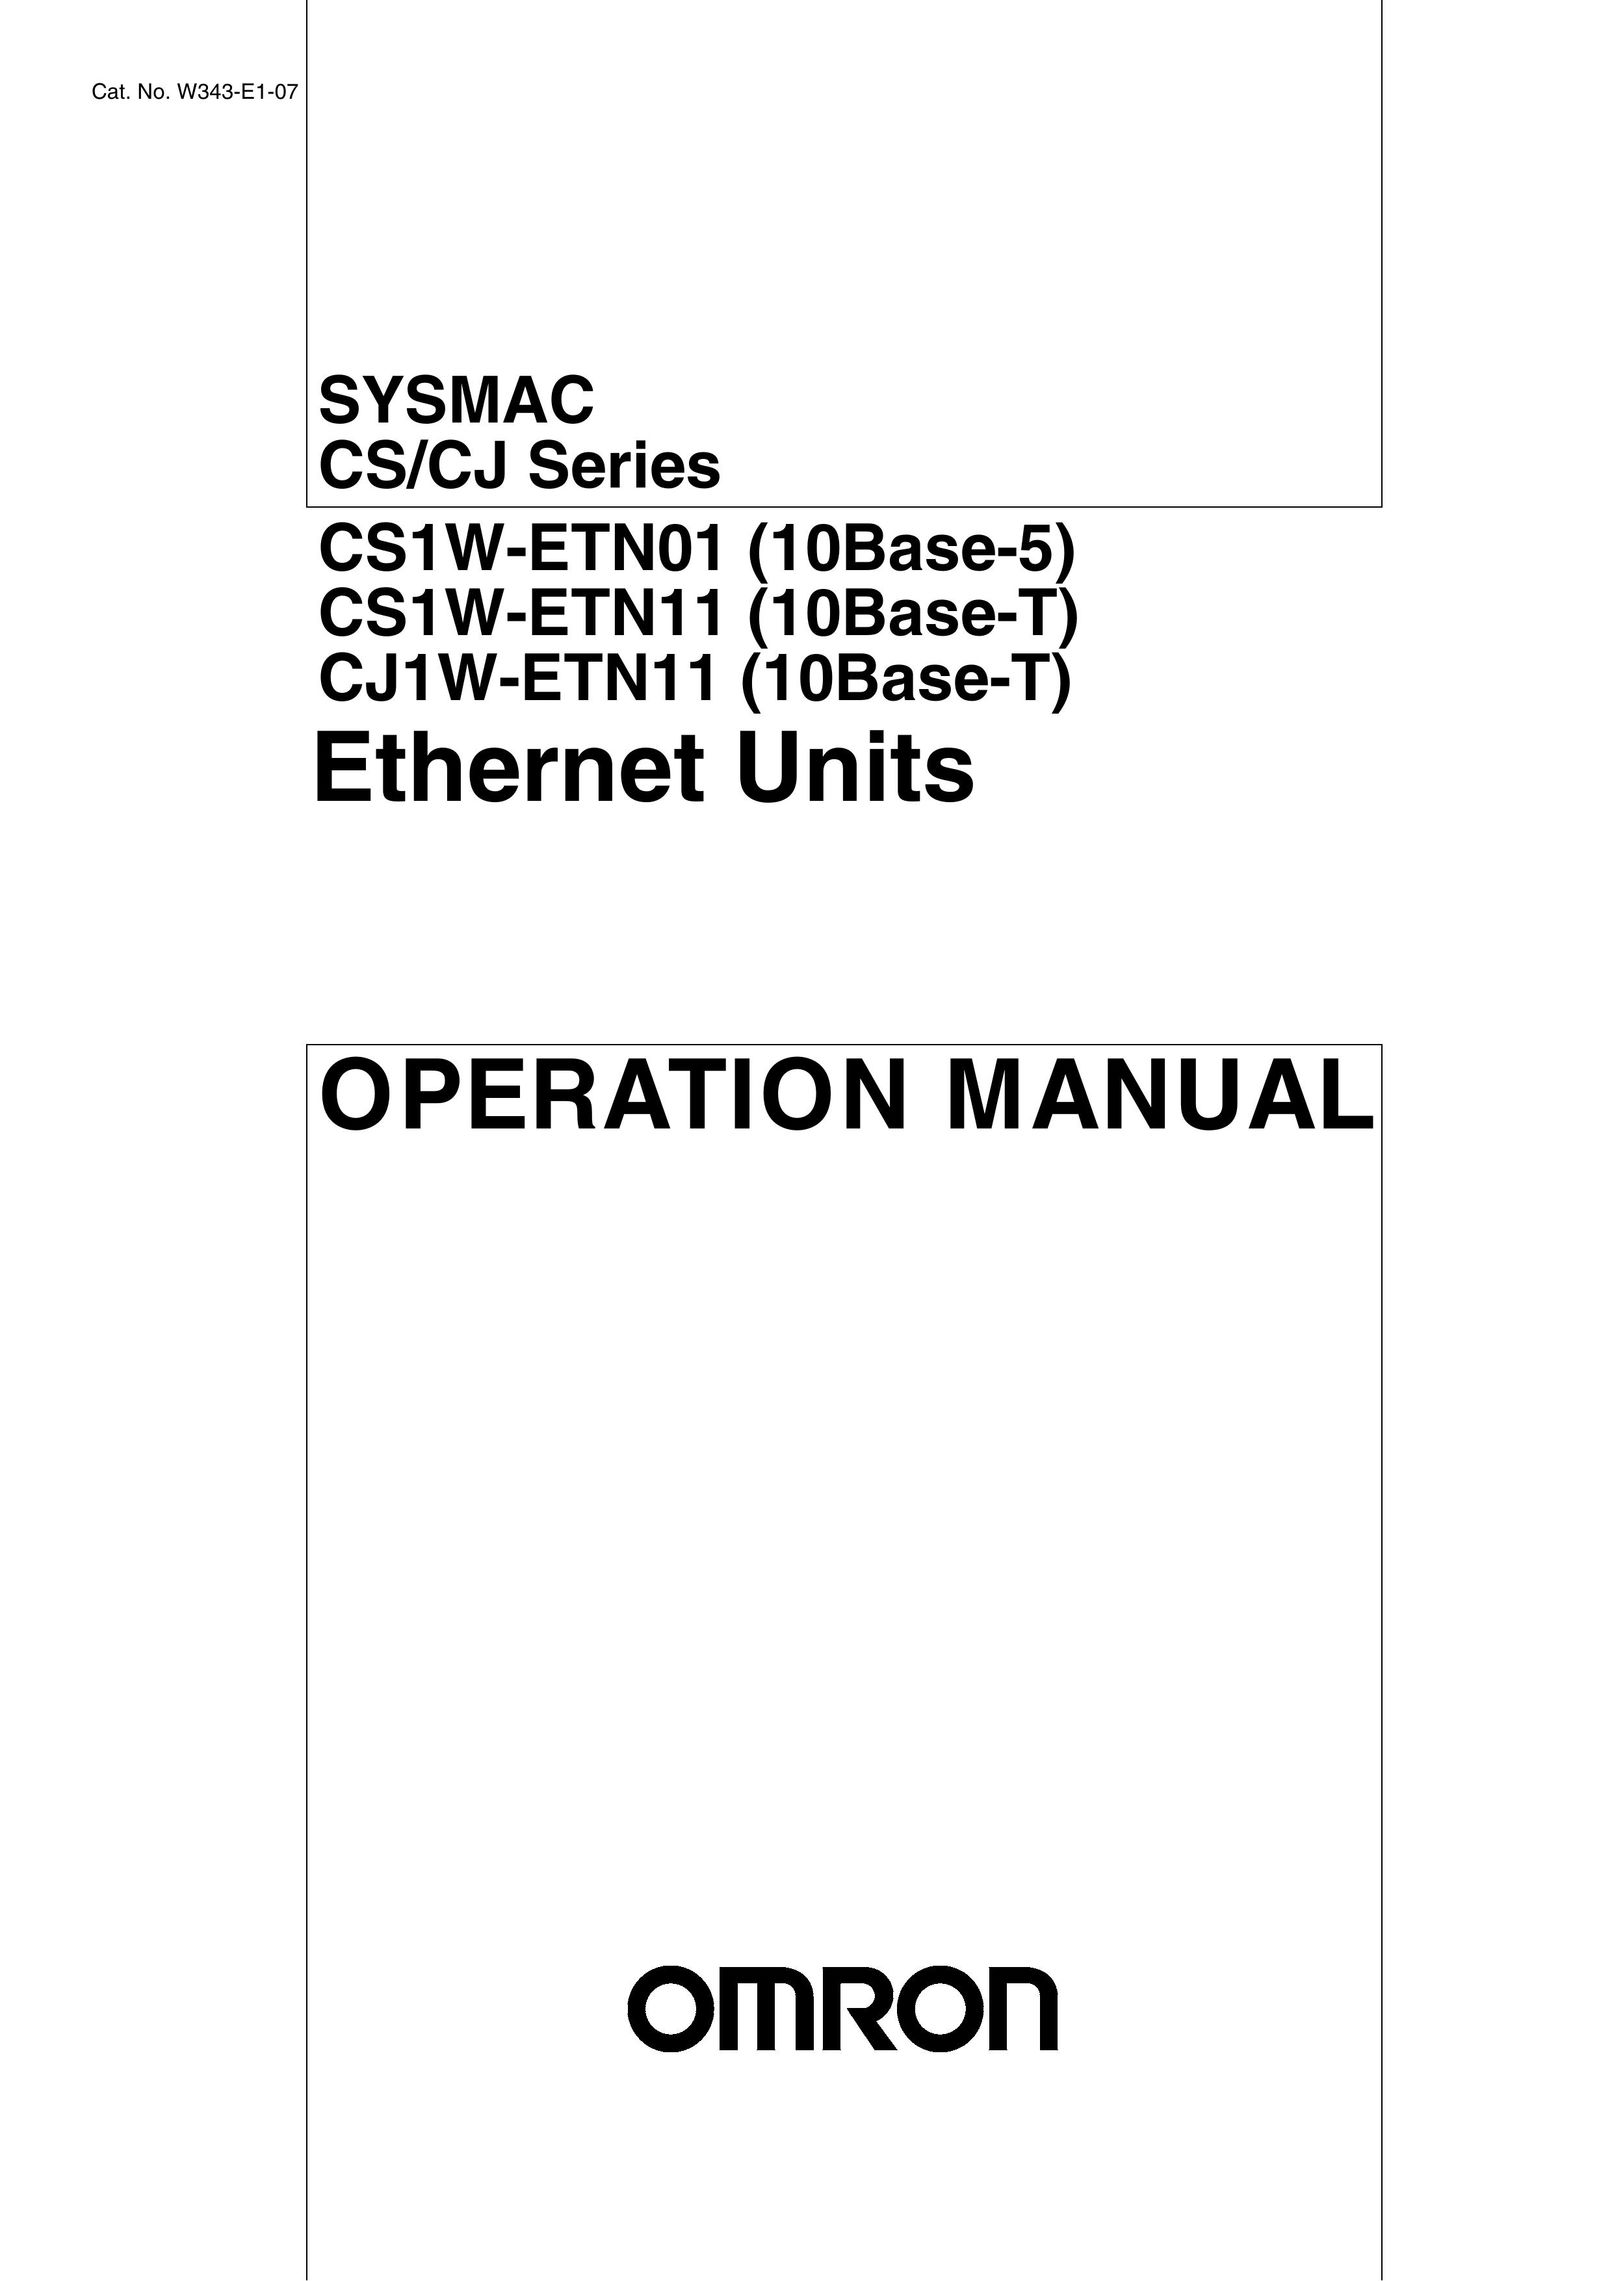 Omron CJ1W-ETN11 Network Card User Manual